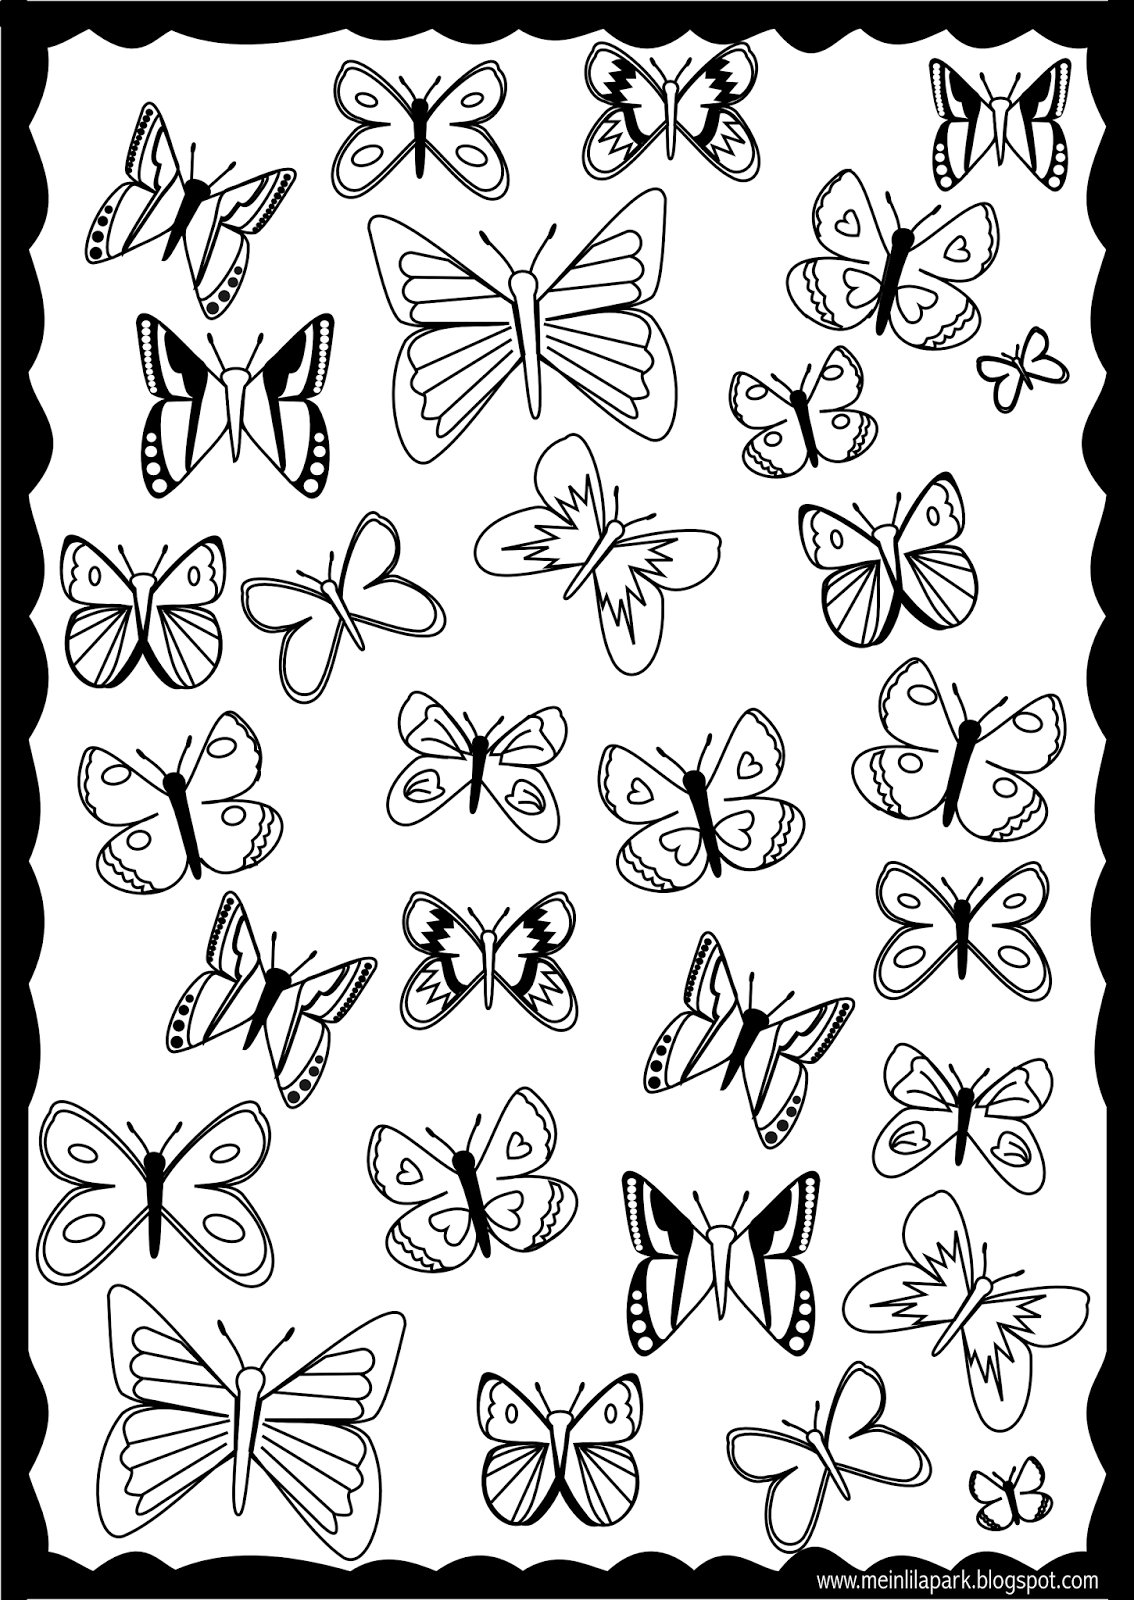 Free Printable Butterfly Coloring Page Ausdruckbare Ausmalseite 